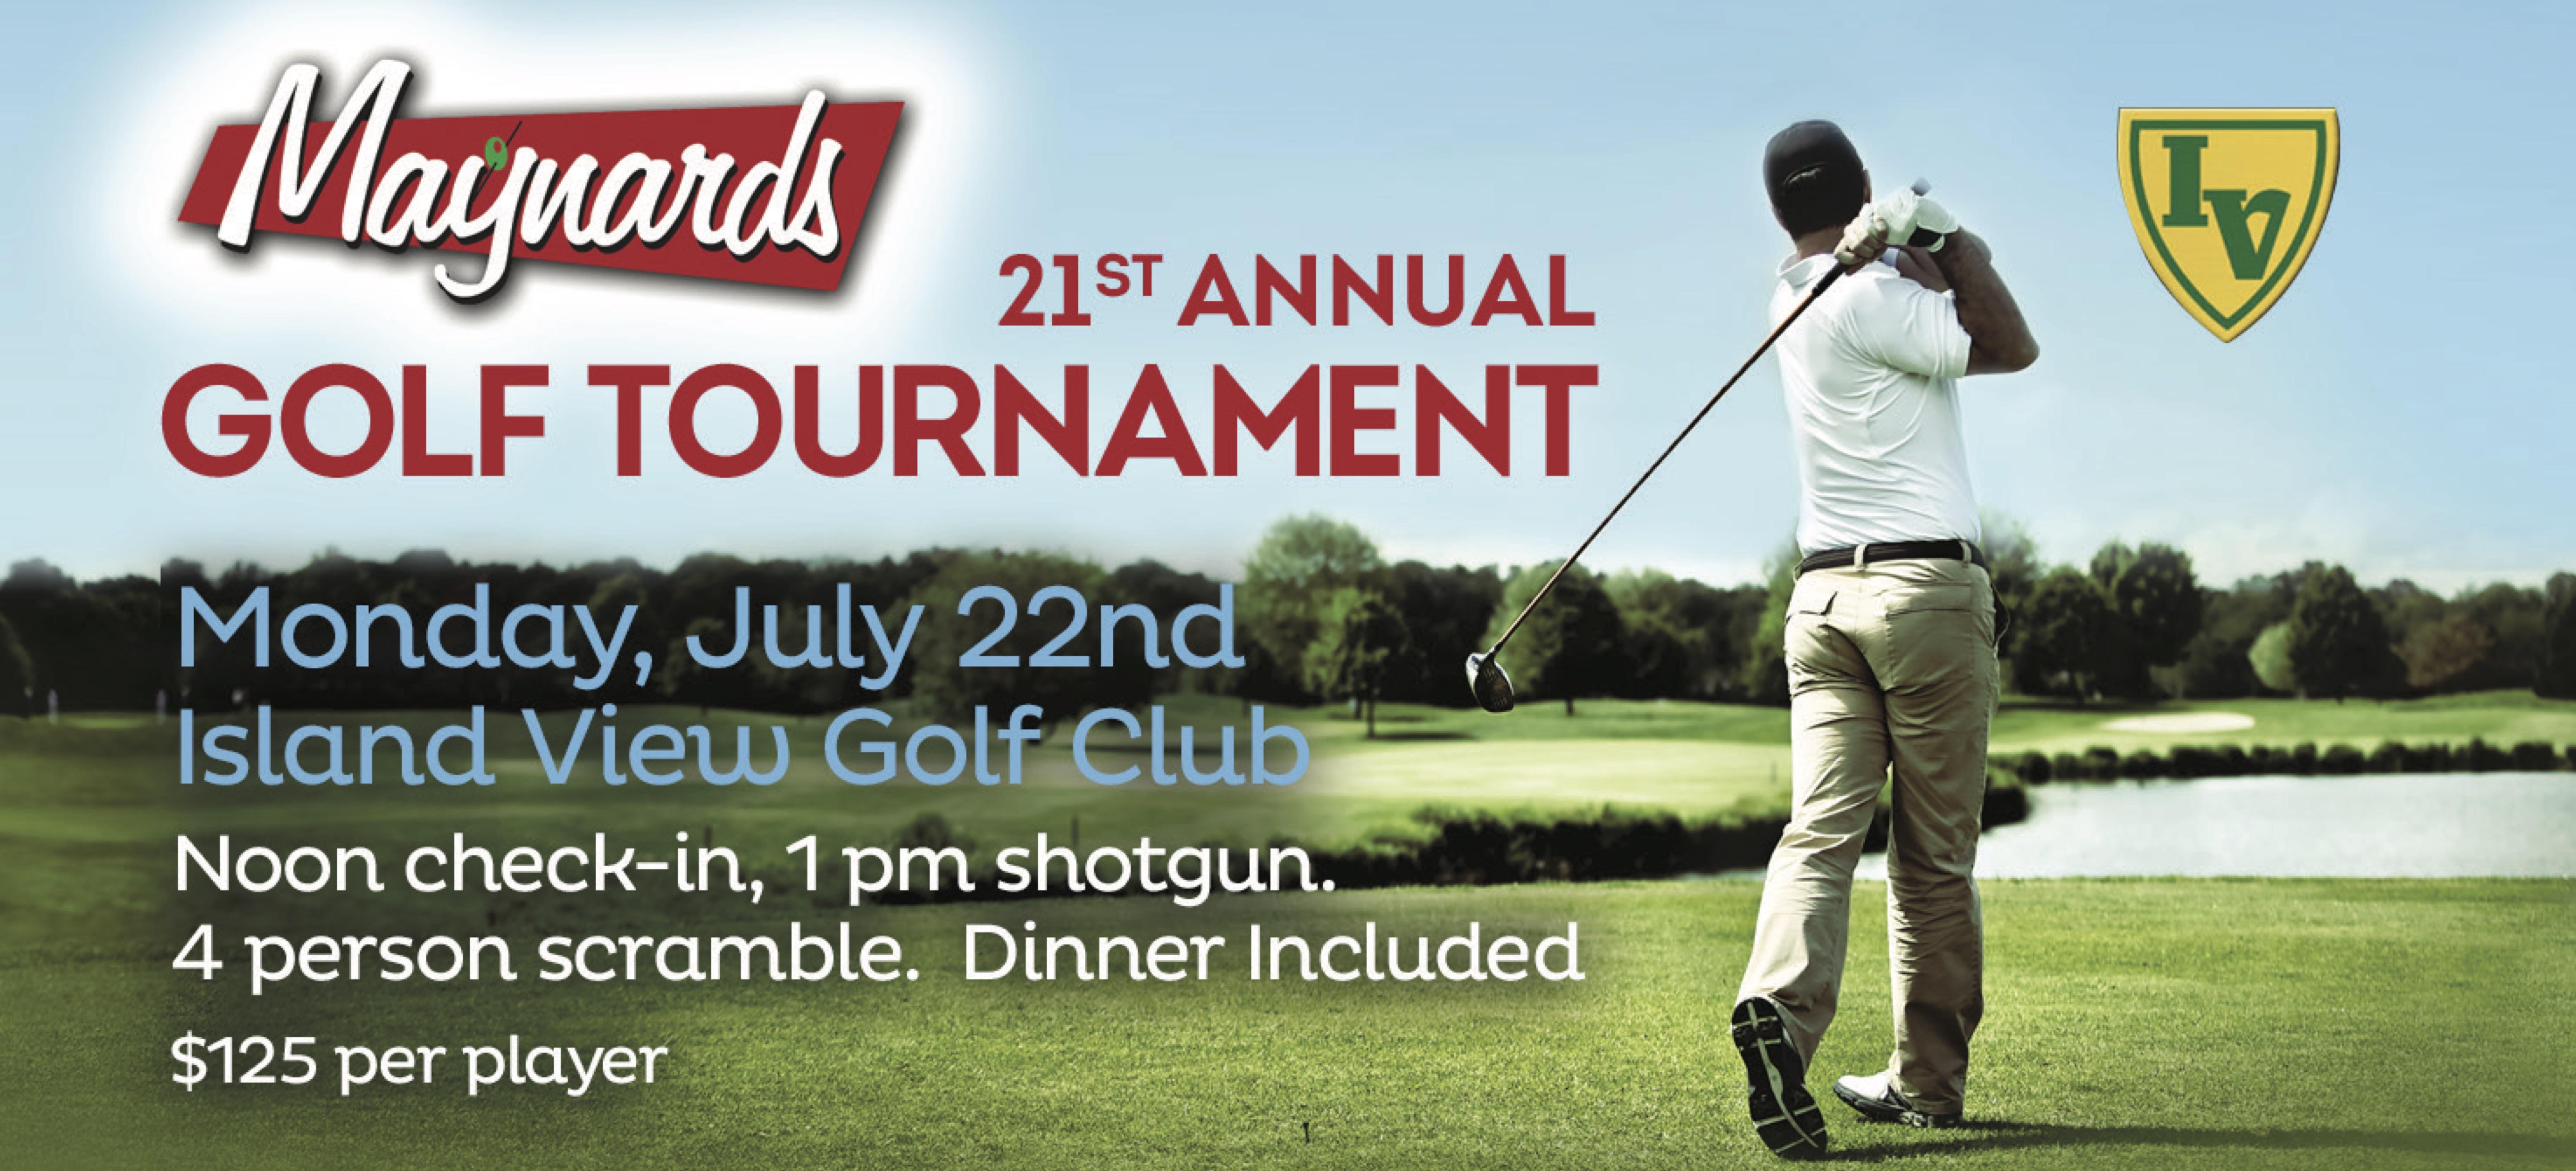 Maynard's 21st Annual Golf Tournament